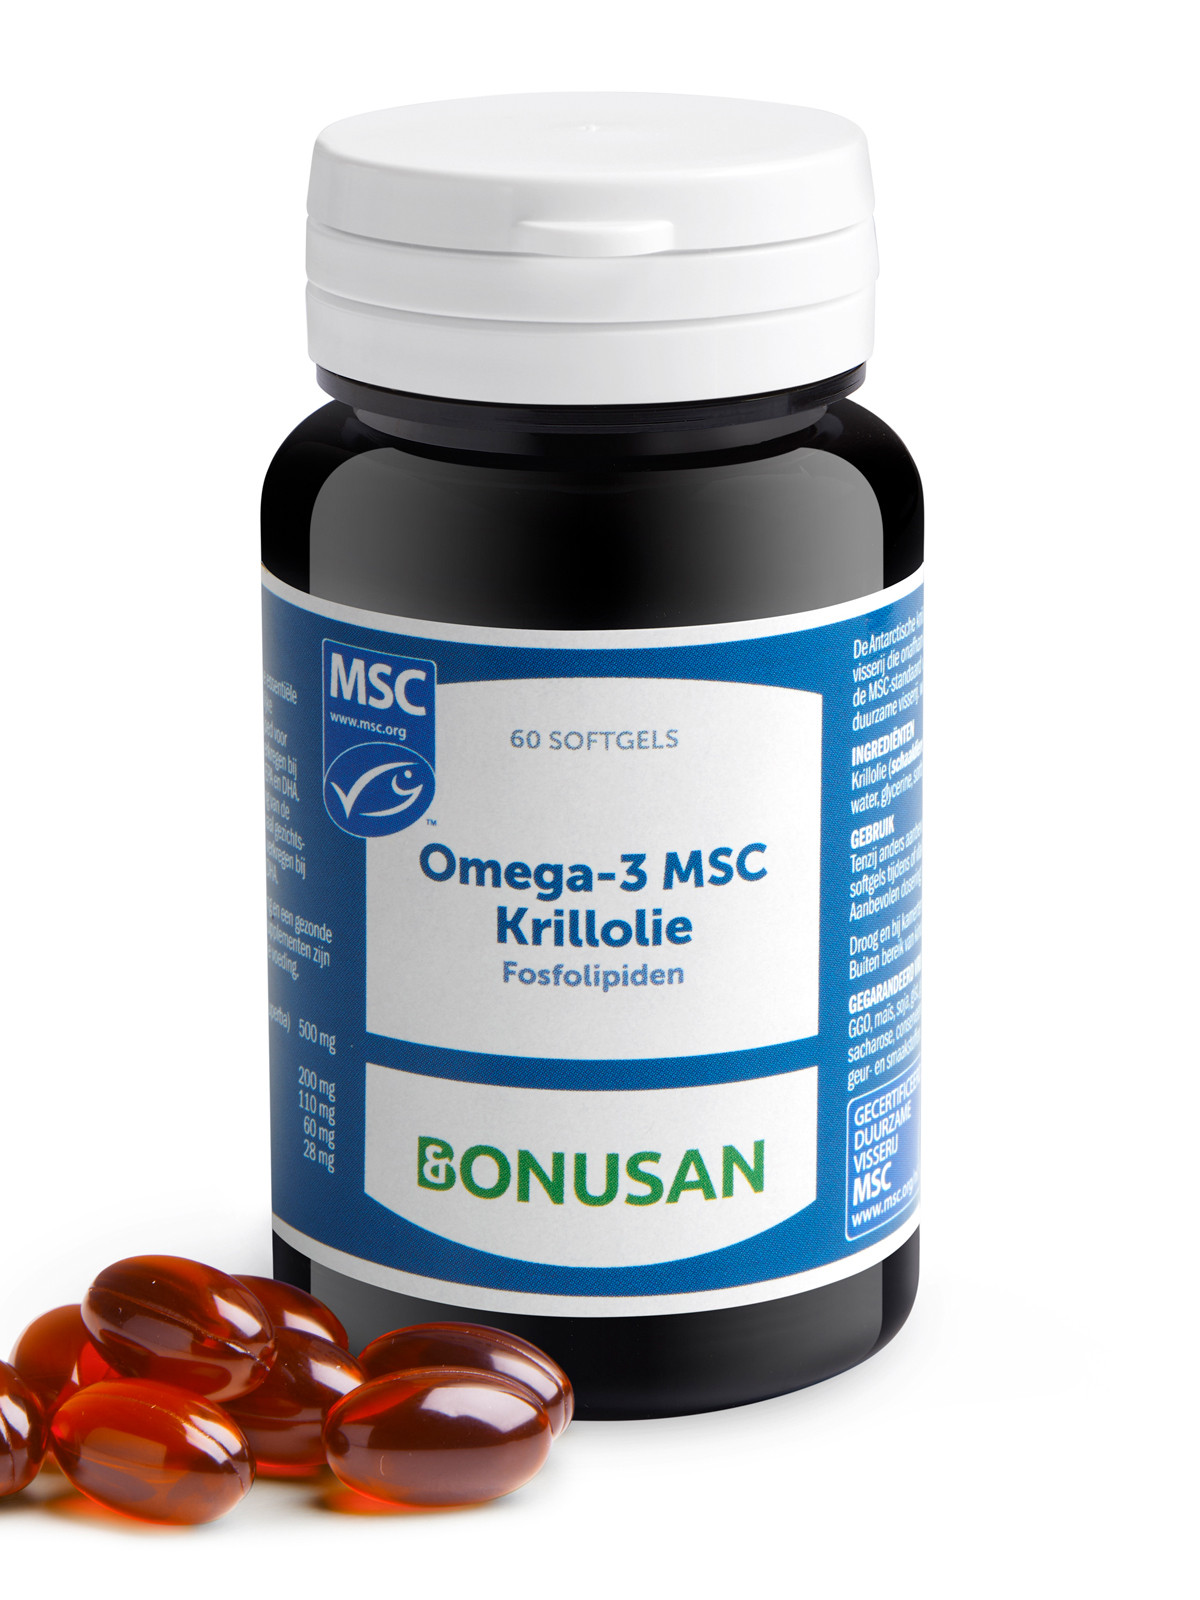 Omega 3 MSC Krillolie 60 gels